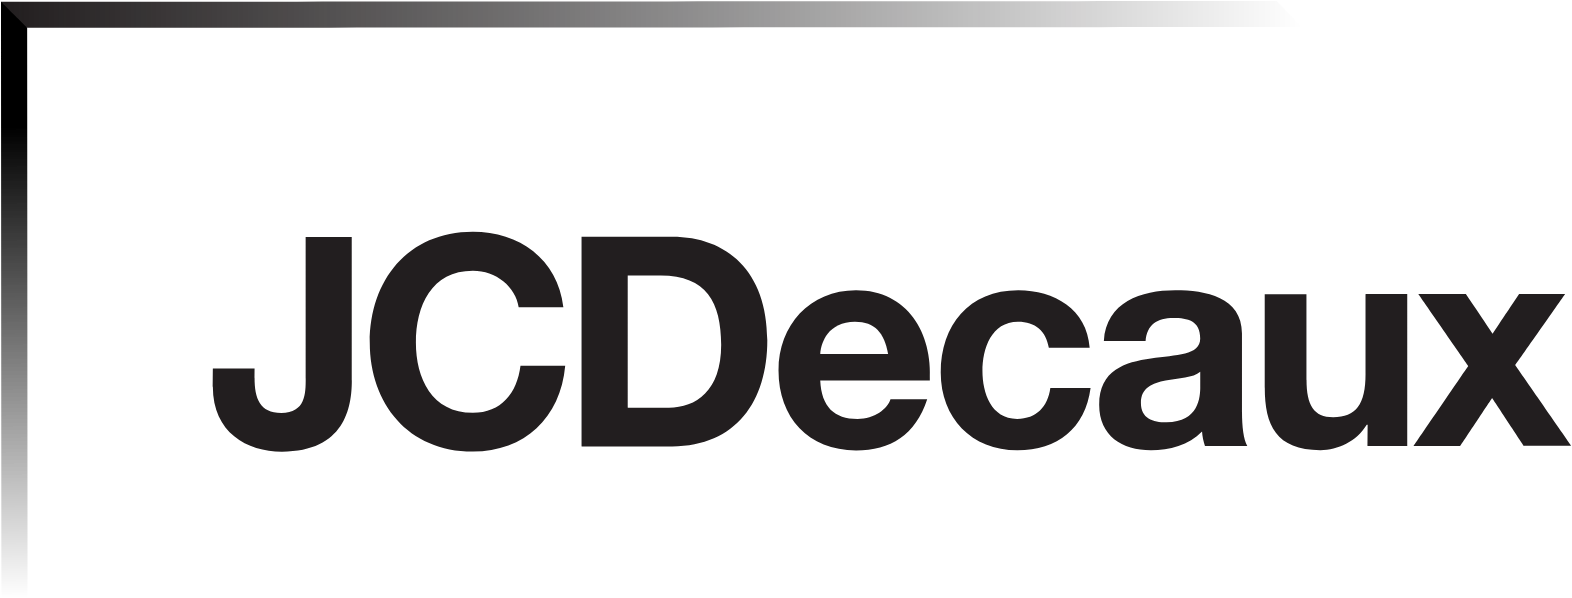 JCDecaux logo (transparent PNG)